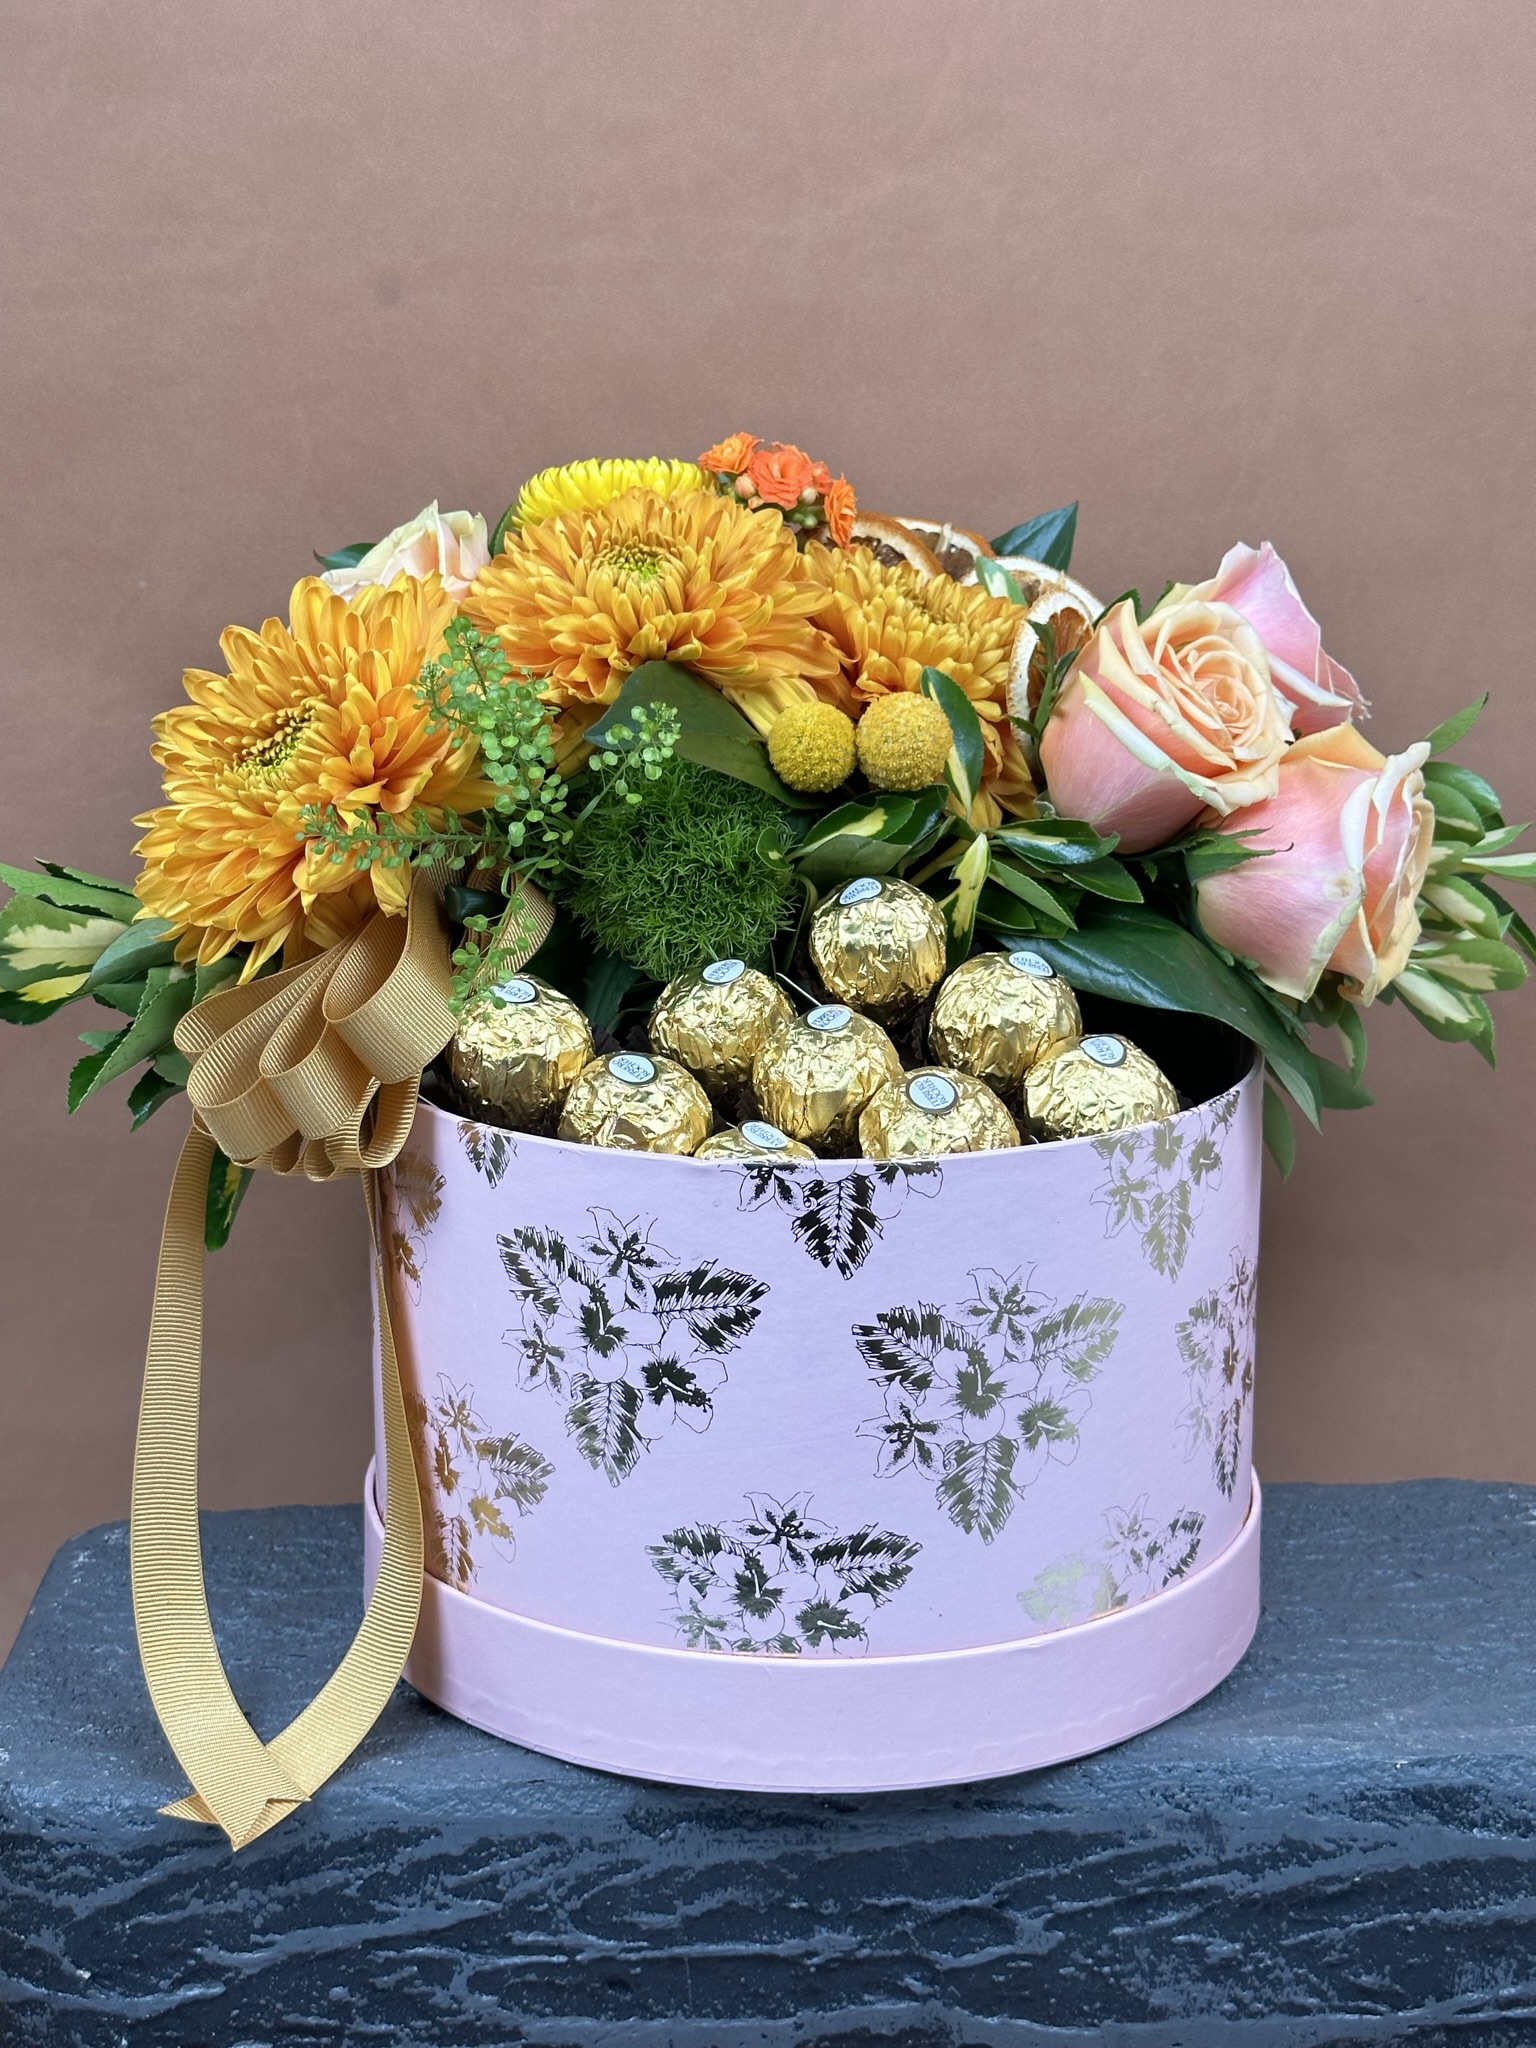 Flowers Chocolate Box